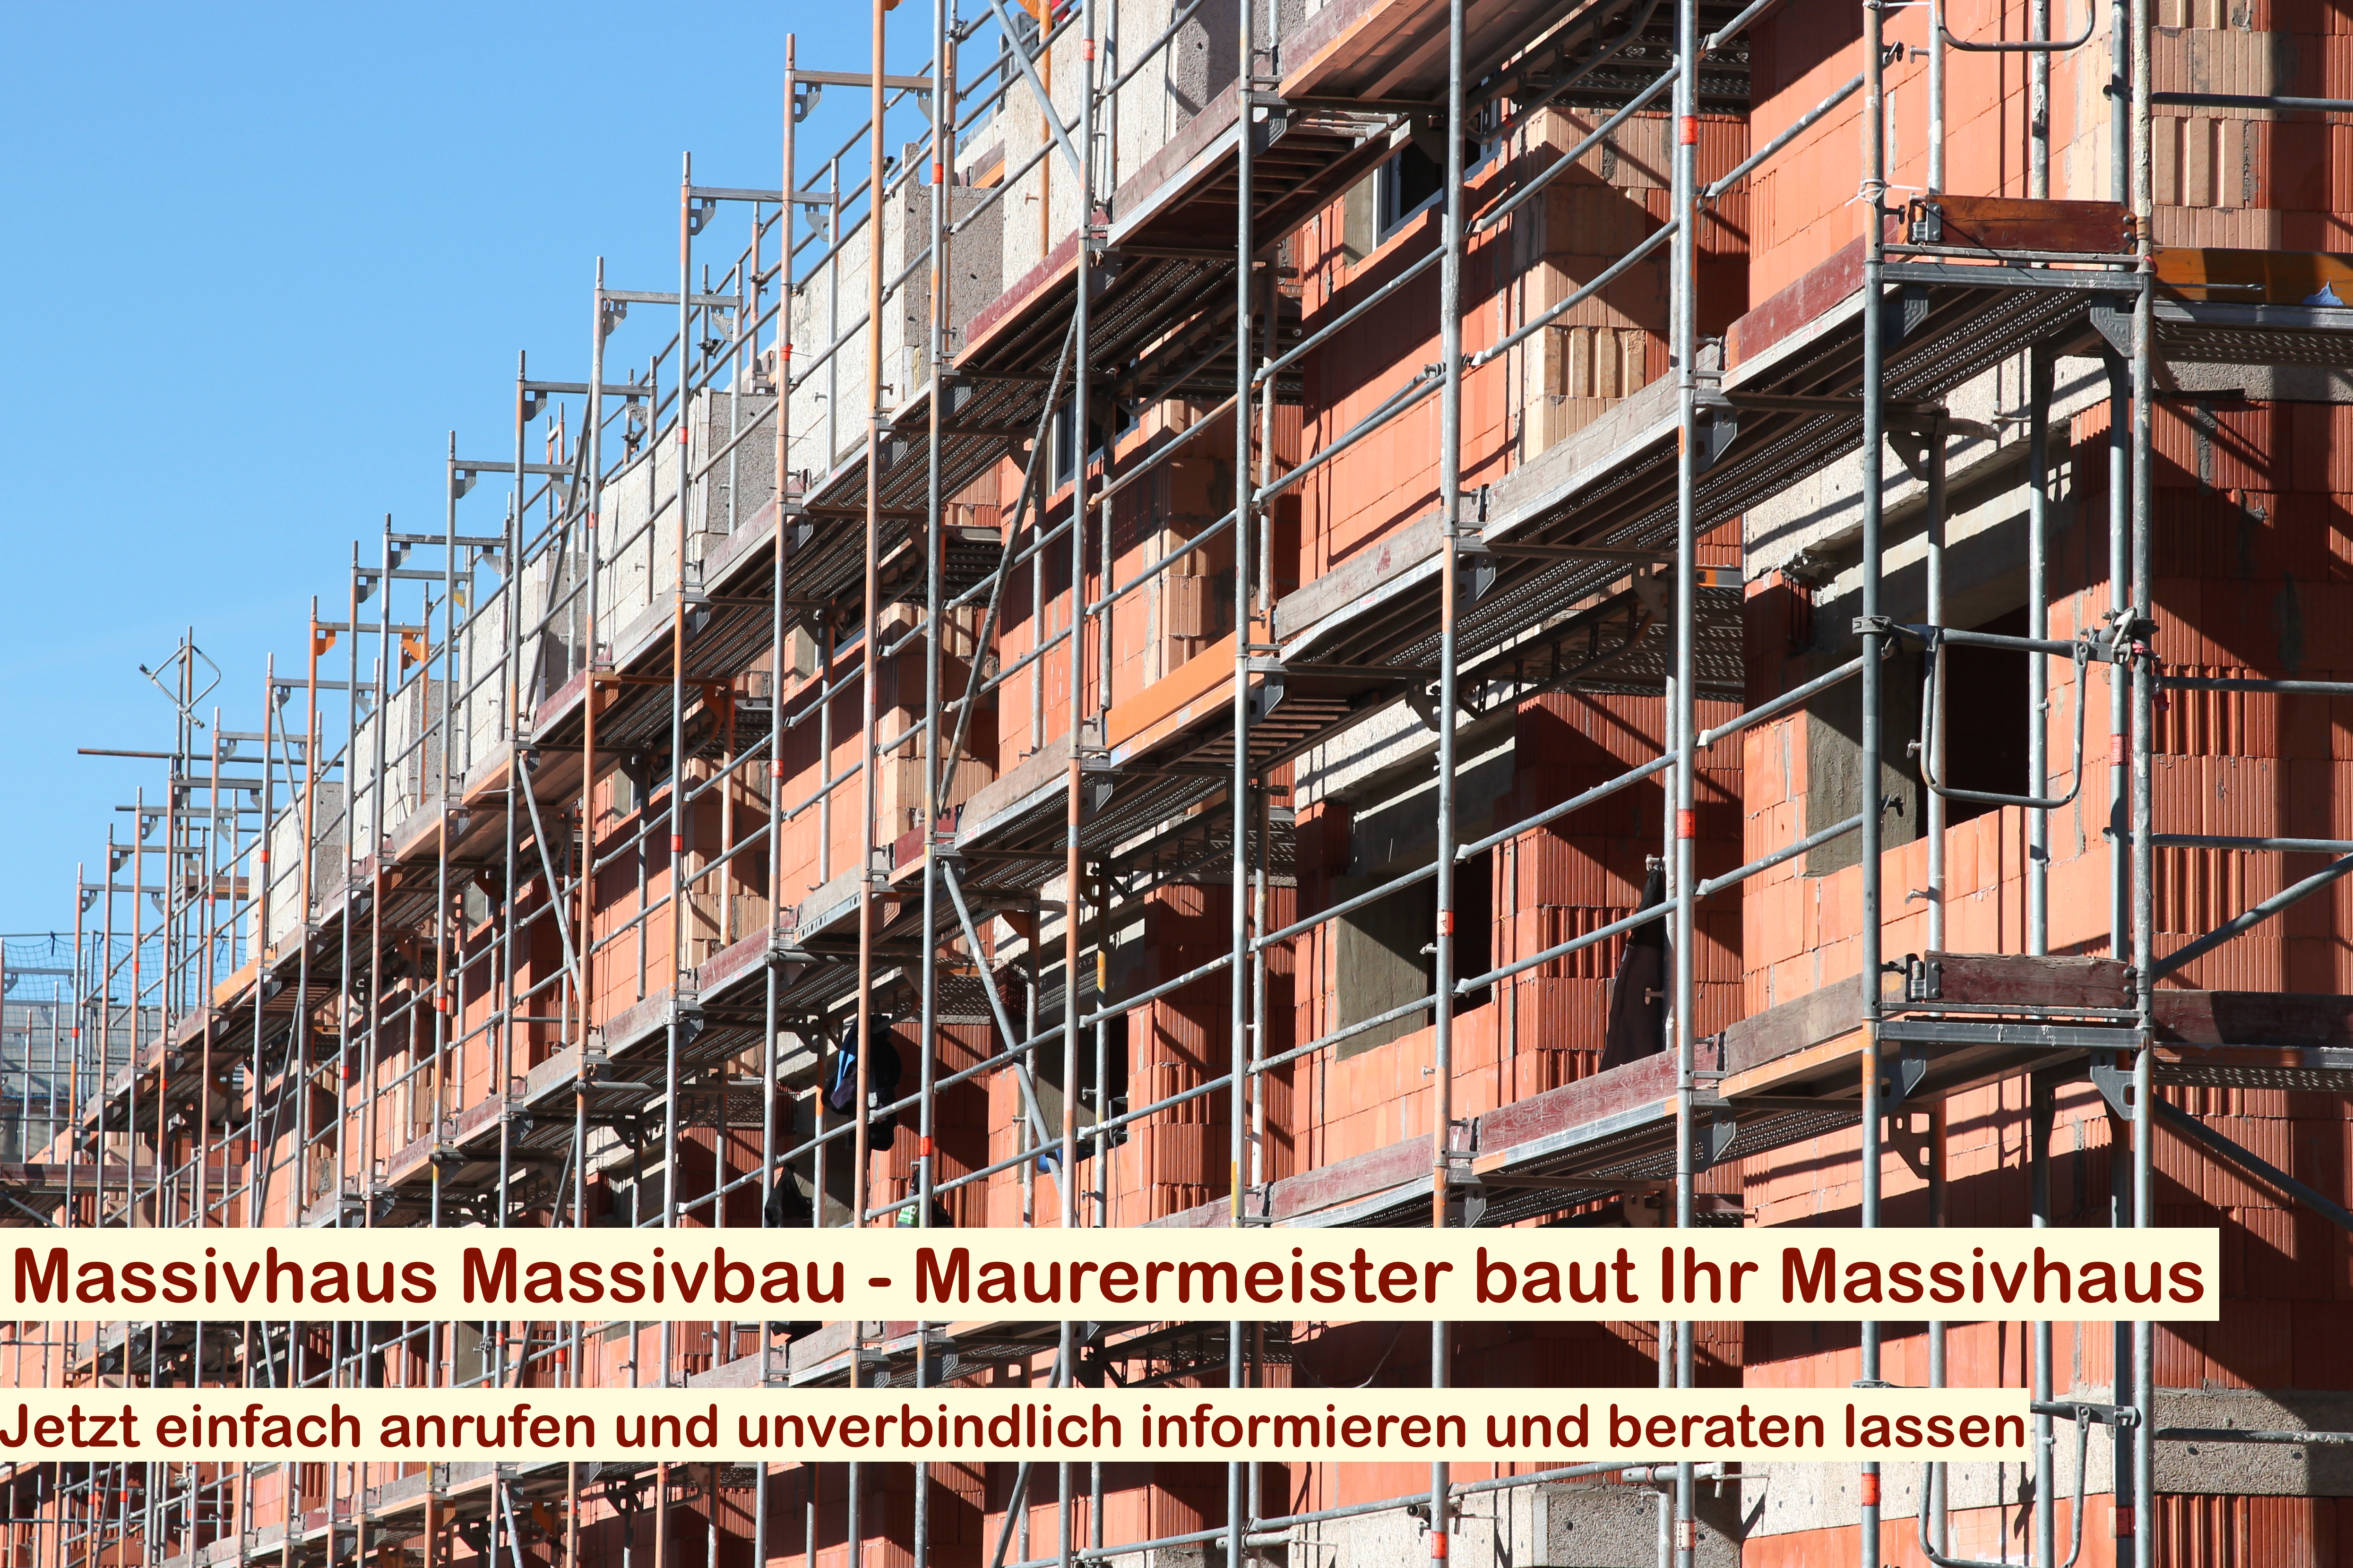 Massivhaus Massivbau Berlin - Maurerarbeiten